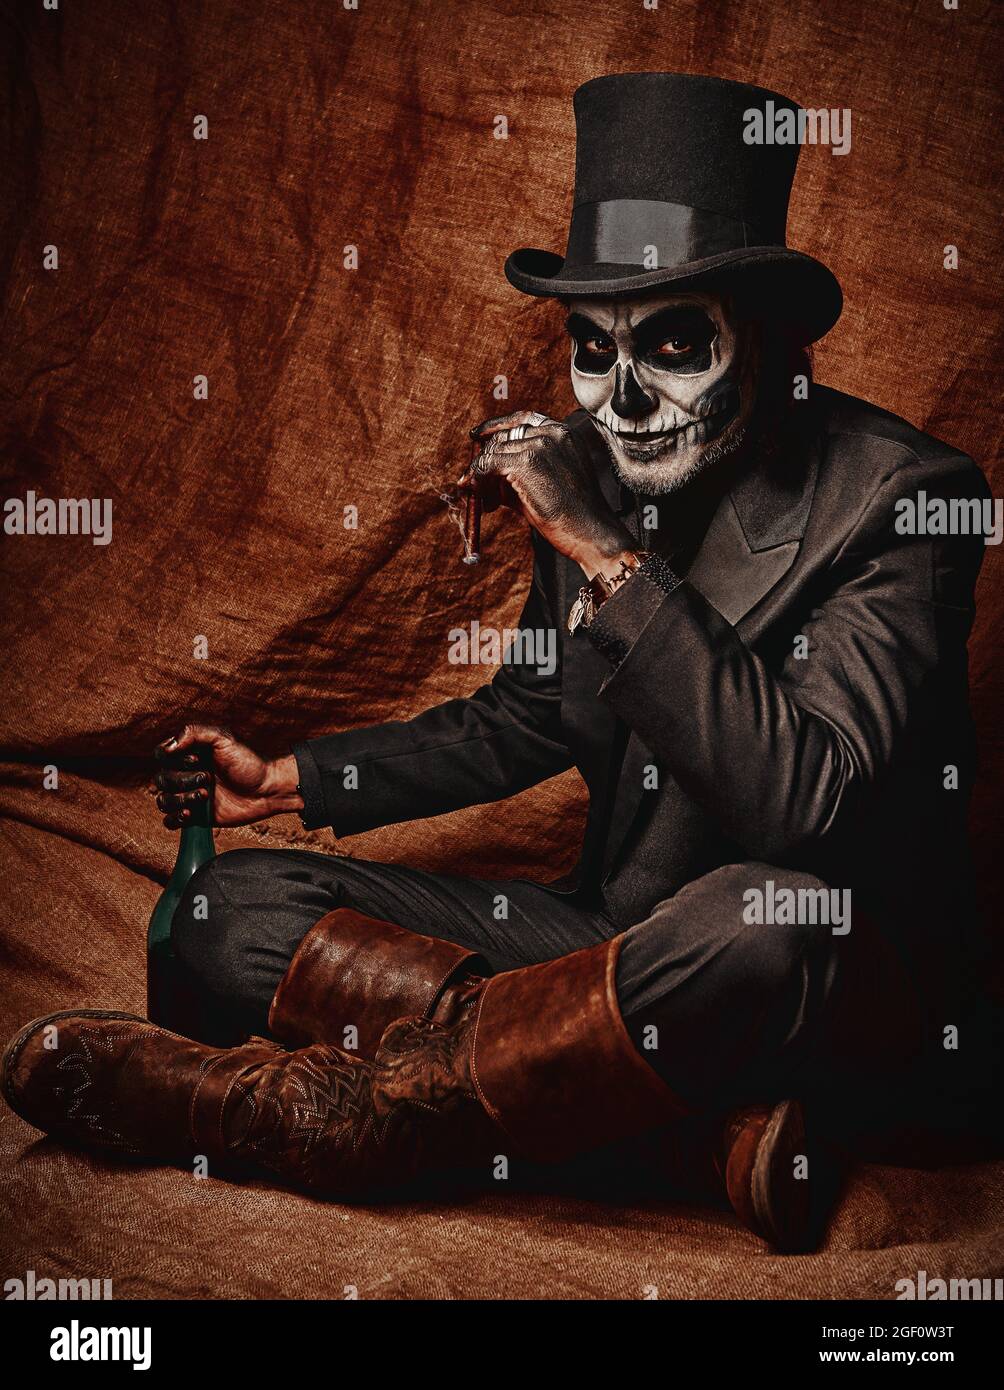 Baron samedi voodoo hi-res stock photography and images - Alamy